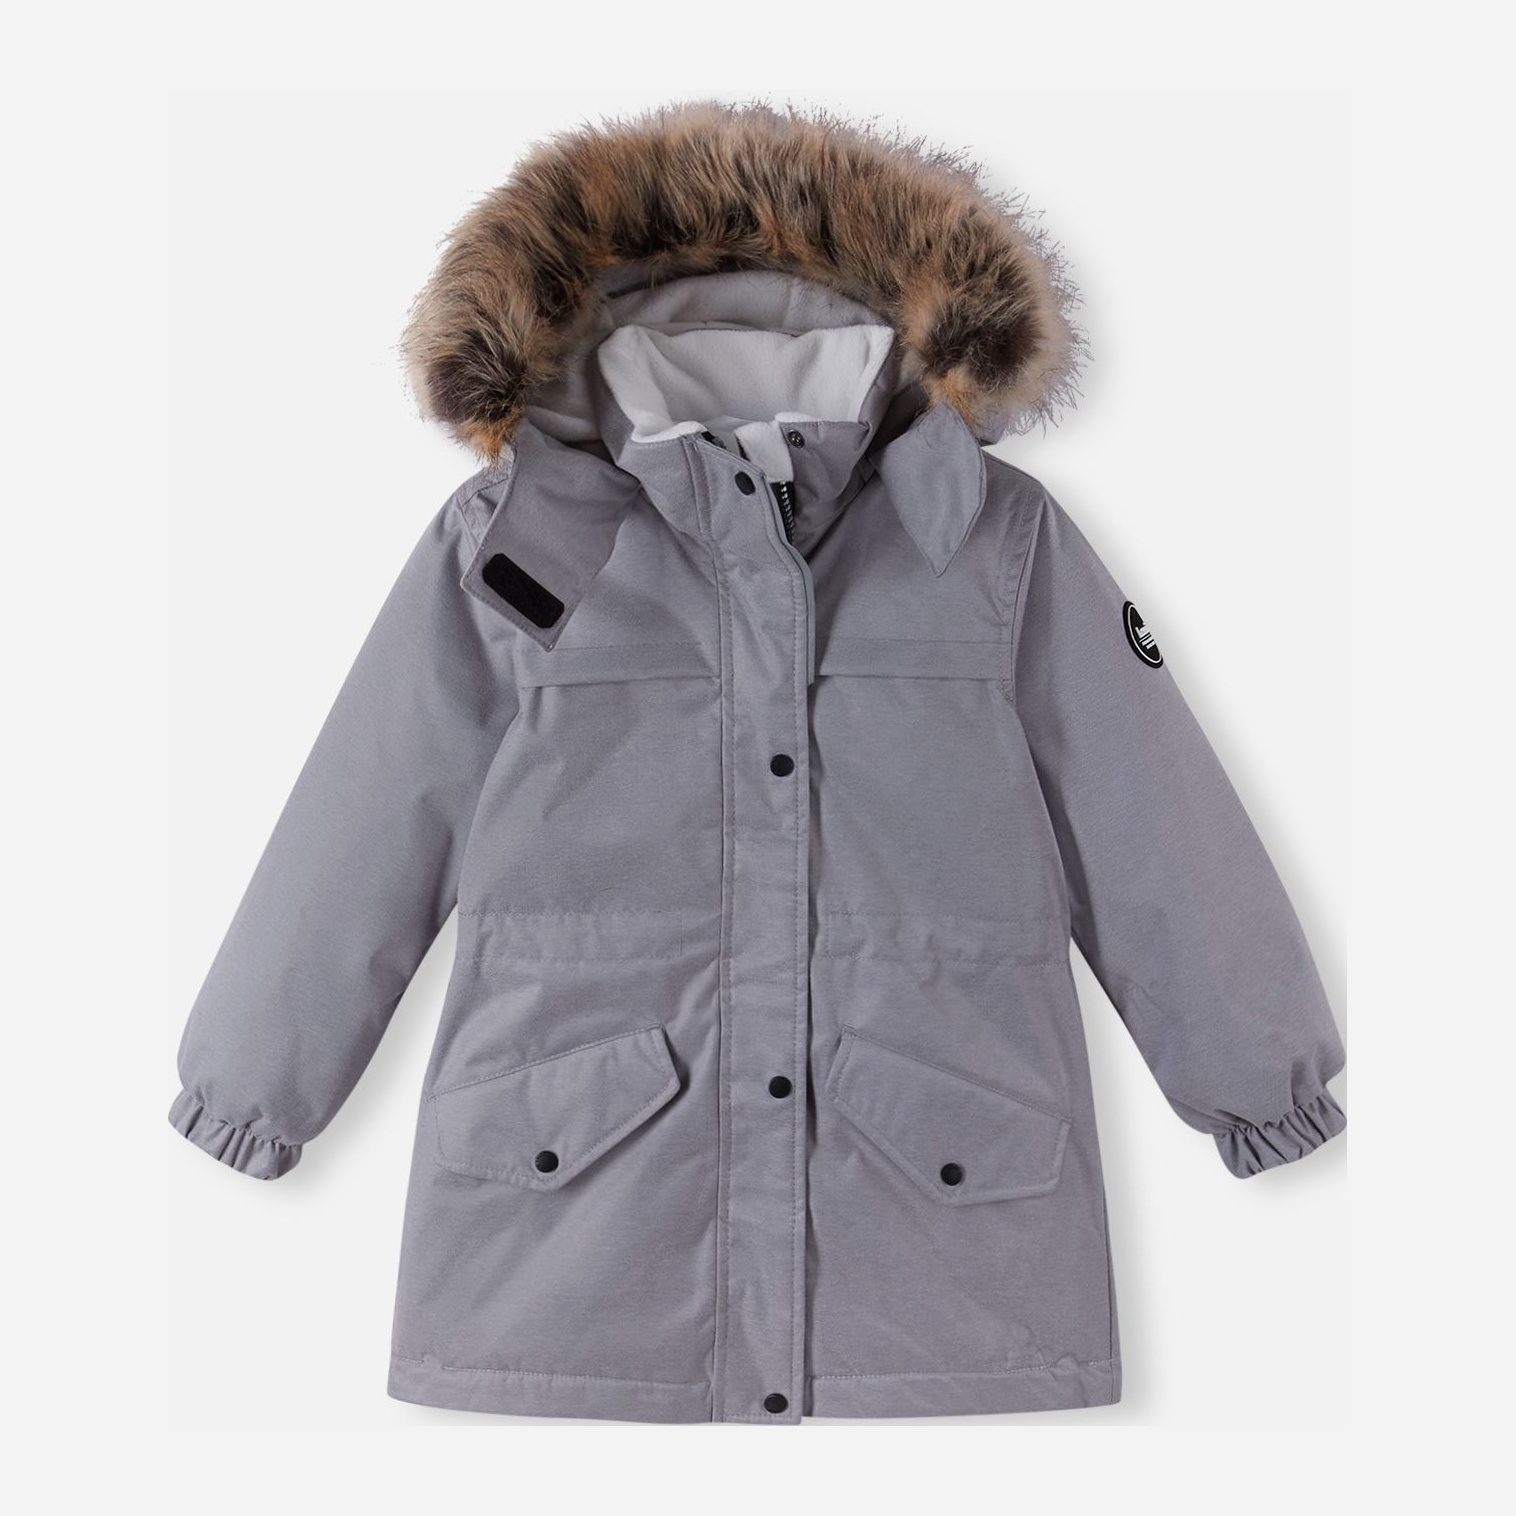 Акция на Дитяча зимова термо куртка для дівчинки Lassie by Reima Selja 7100027A-9090 134 см от Rozetka